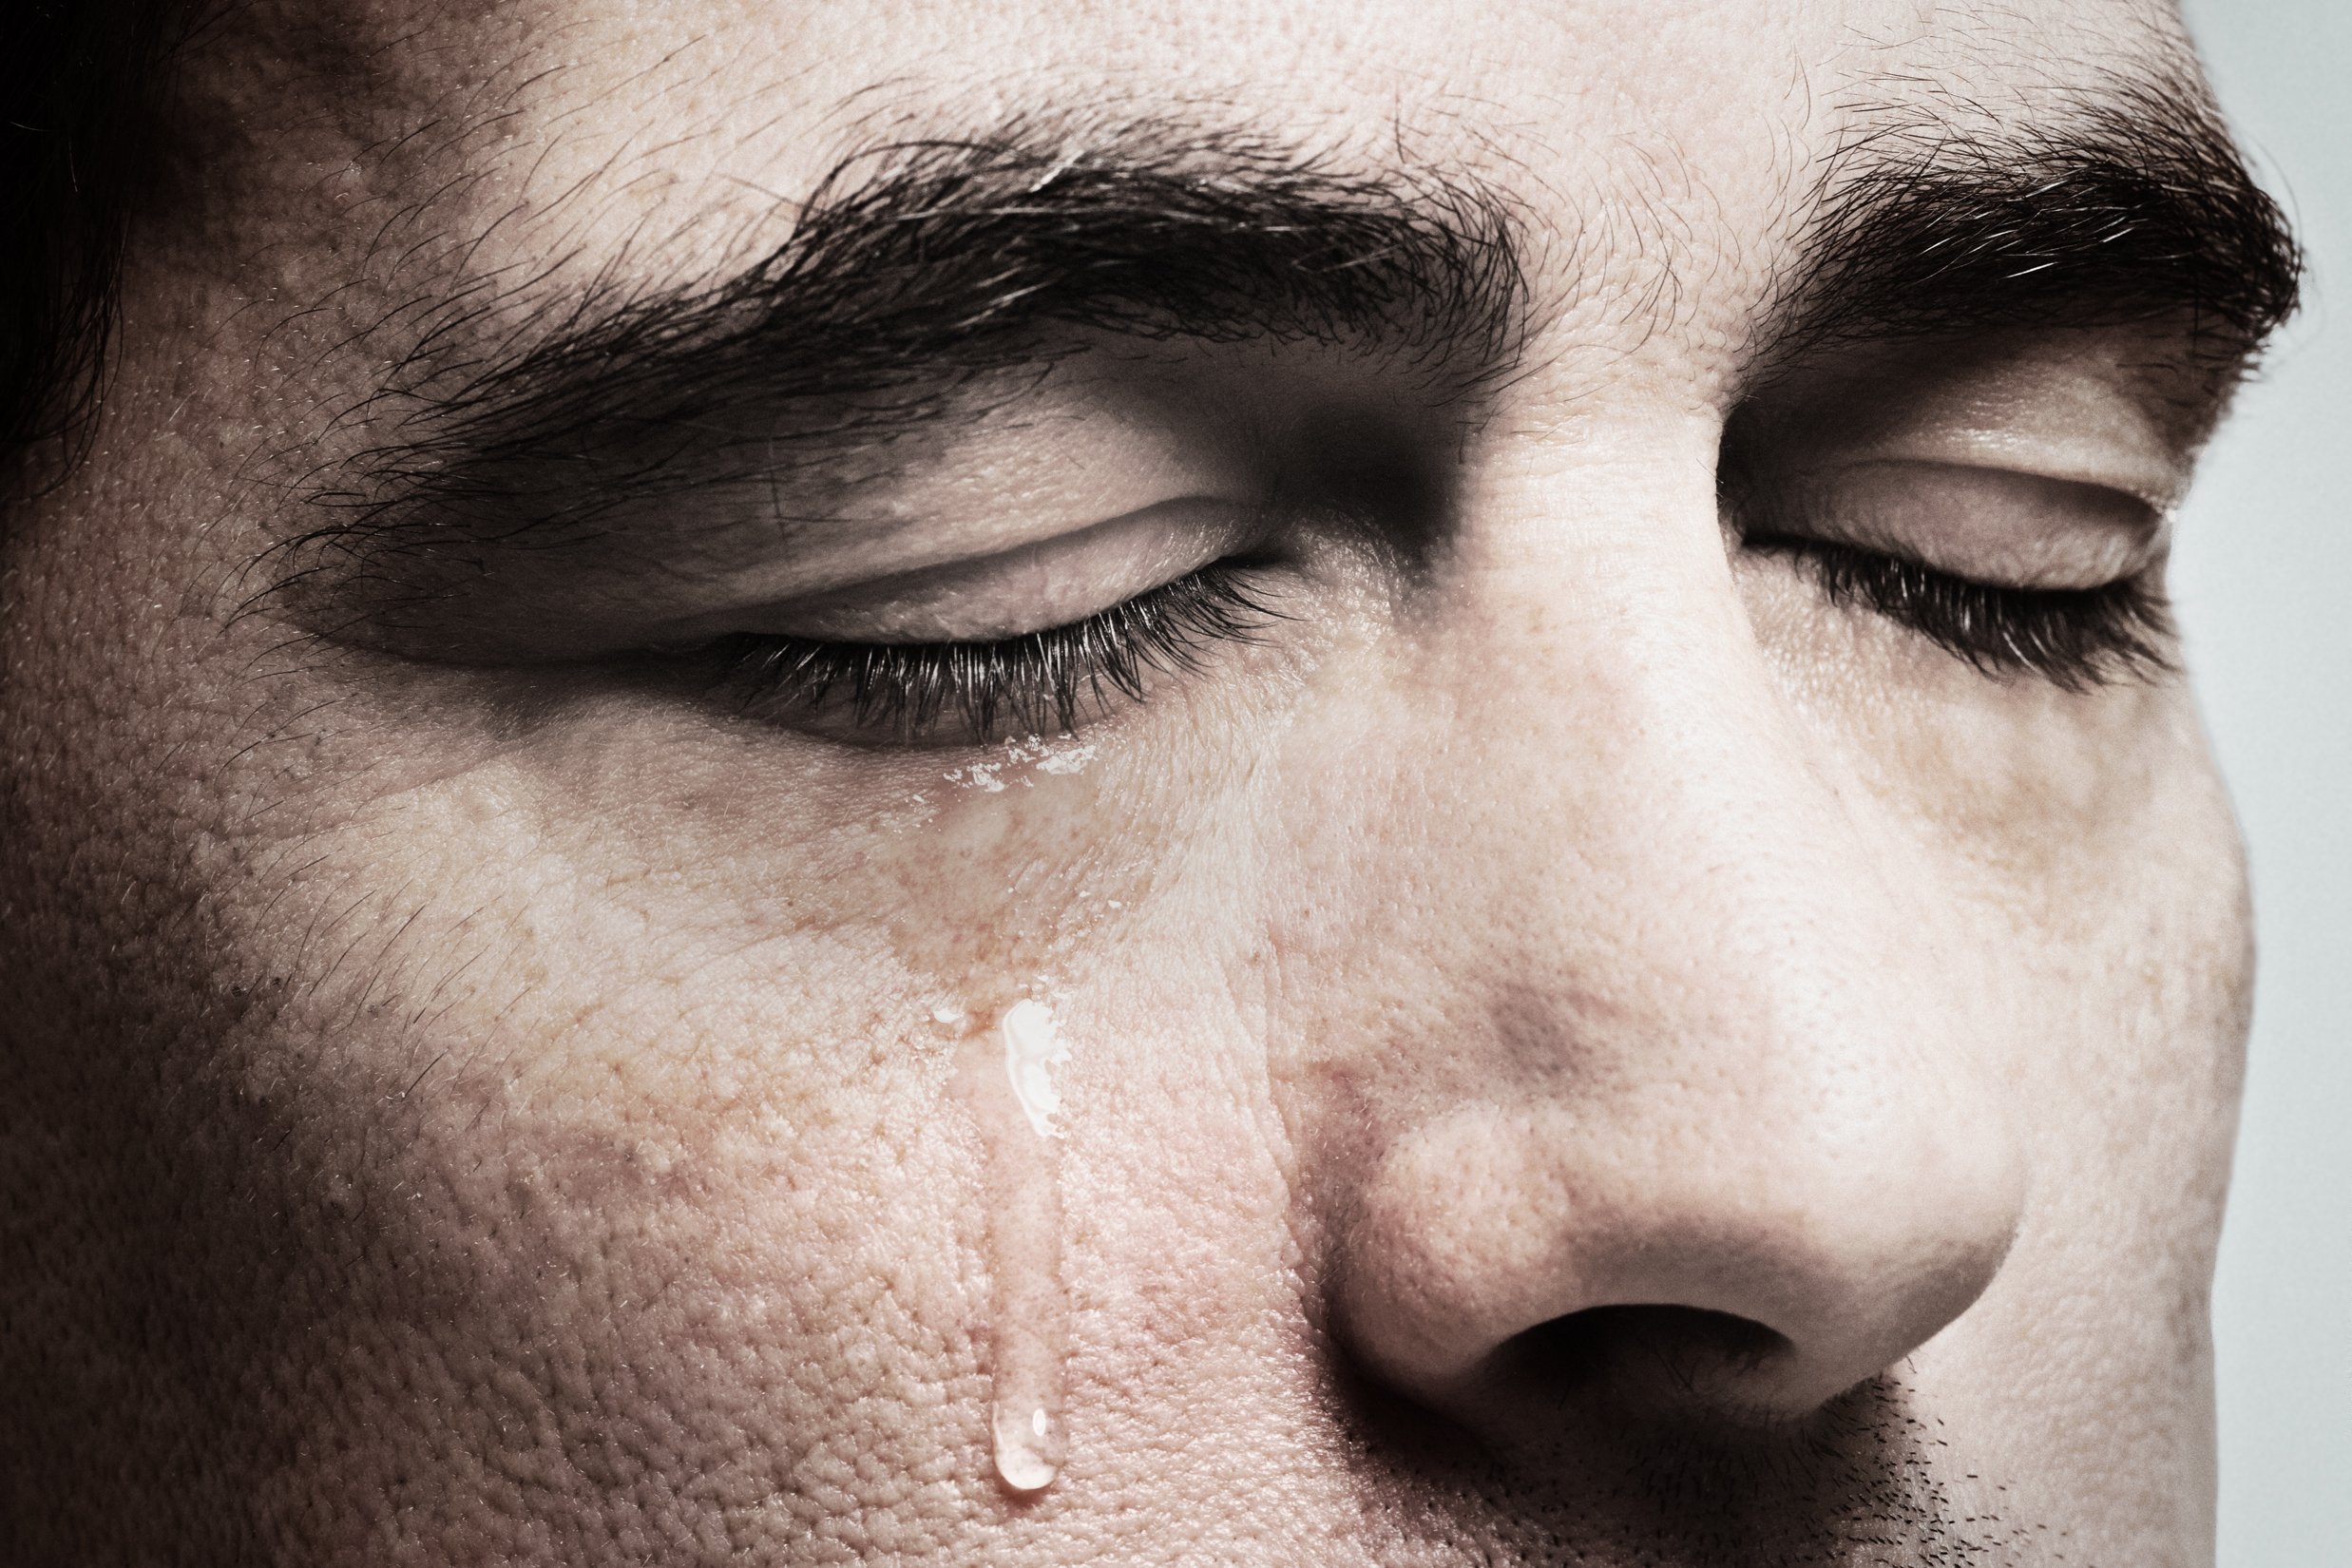 A closeup of a man crying | Source: Shutterstock